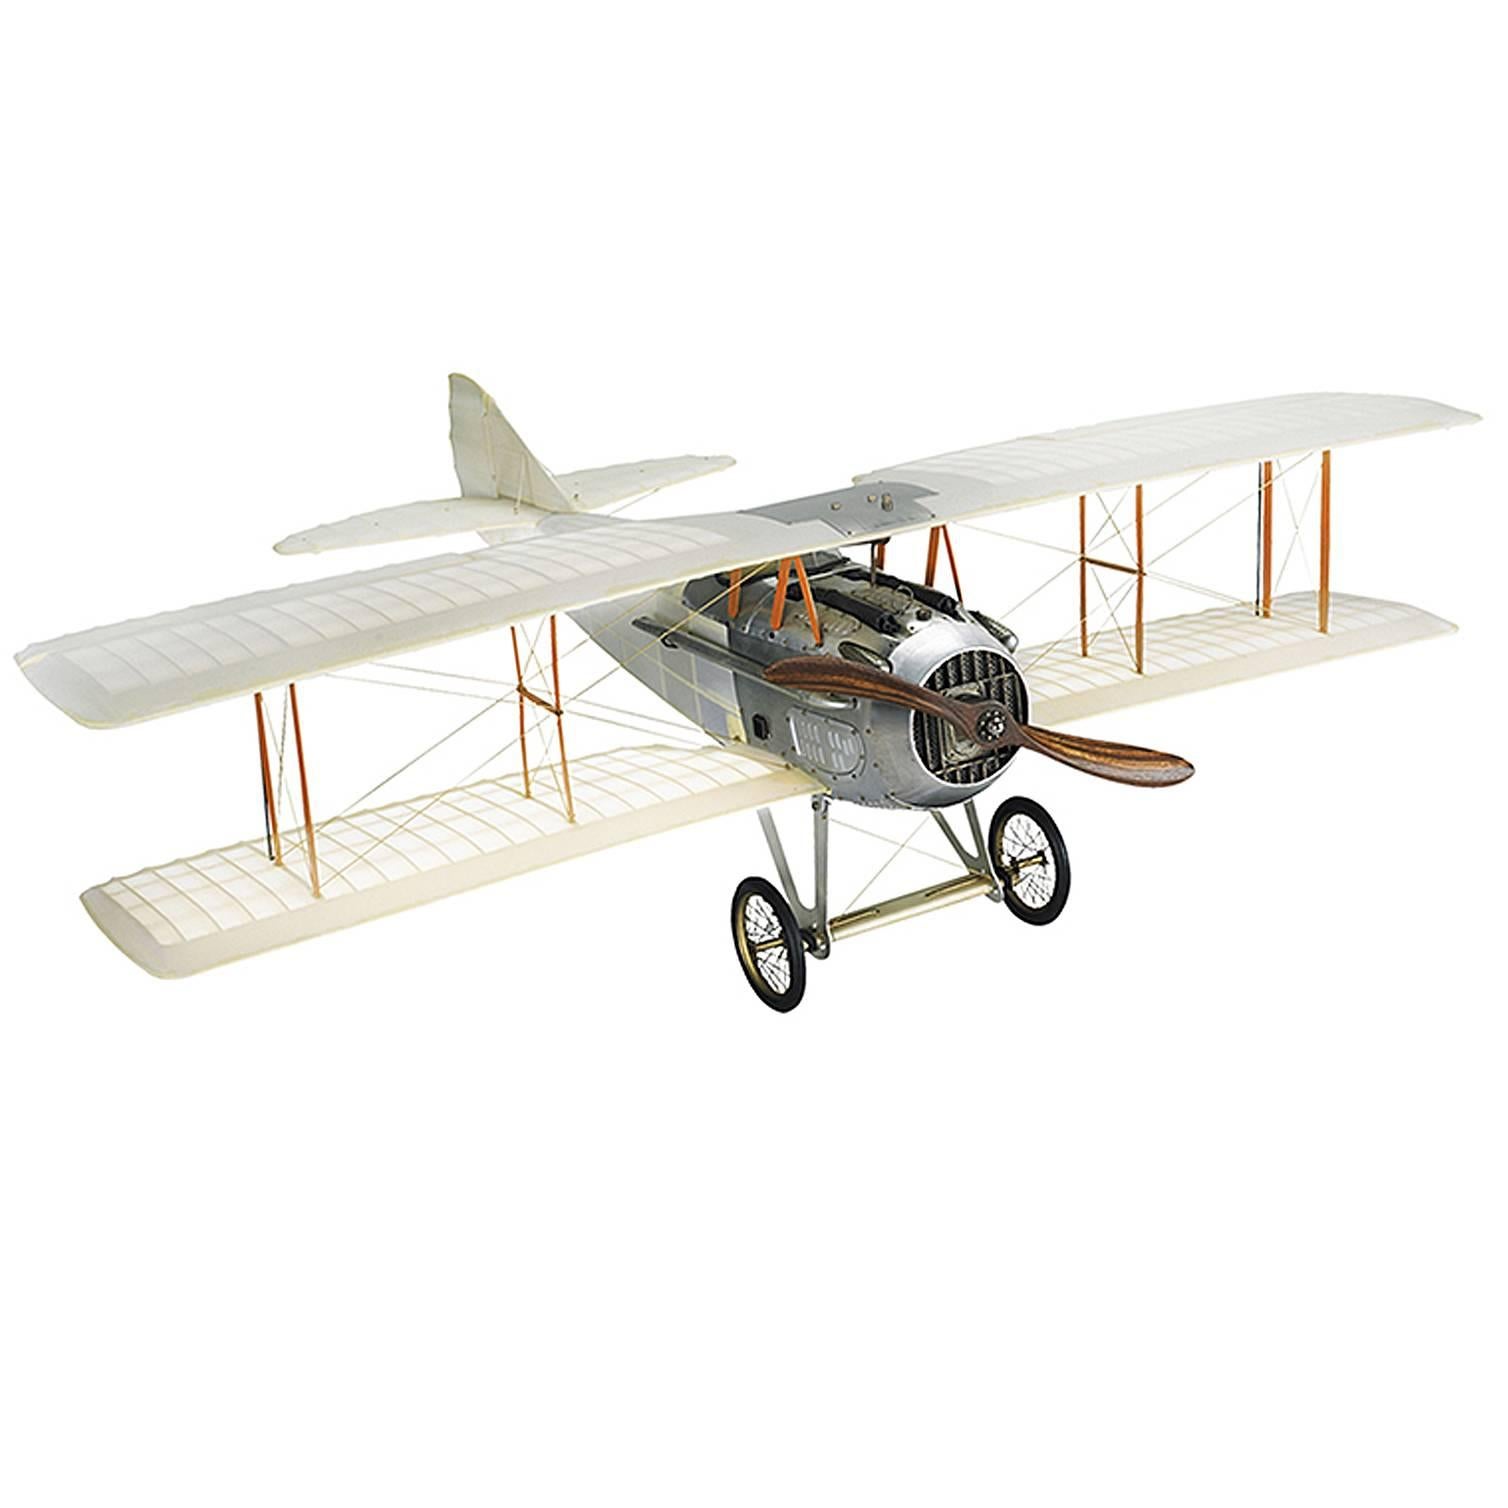 Old Charles Model Aeroplane Transparent Spad Plane Type For Sale